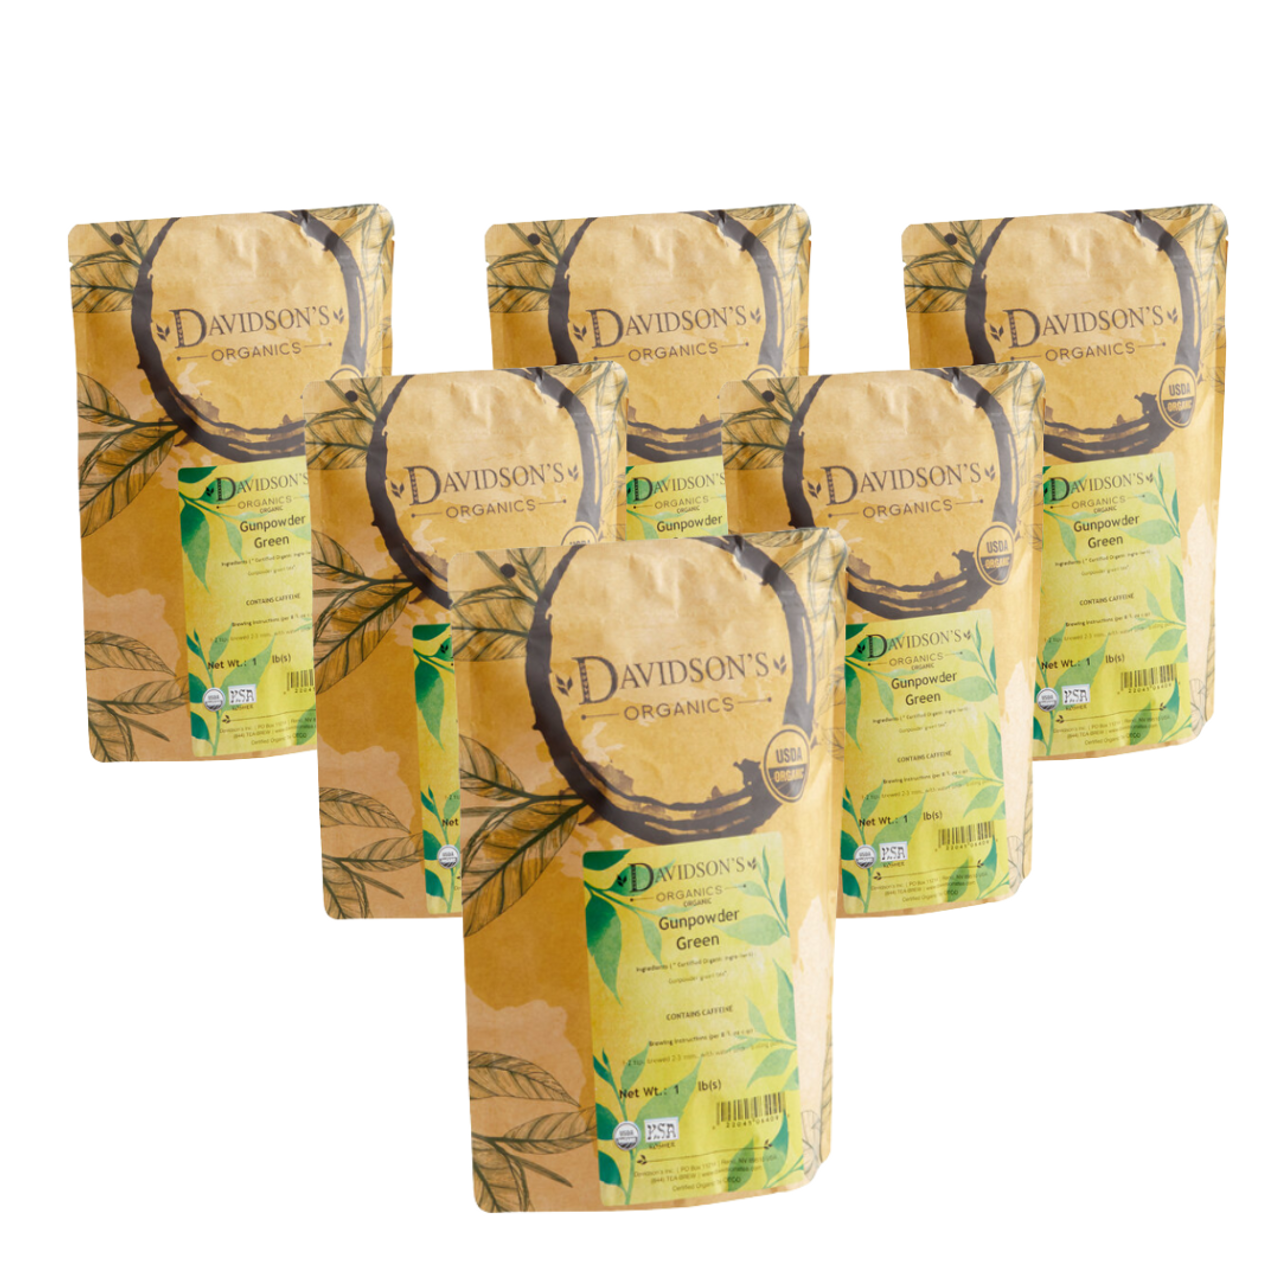 Davidson's Organic Gunpowder Green Loose Leaf Tea | 1LB/0.45 KGS